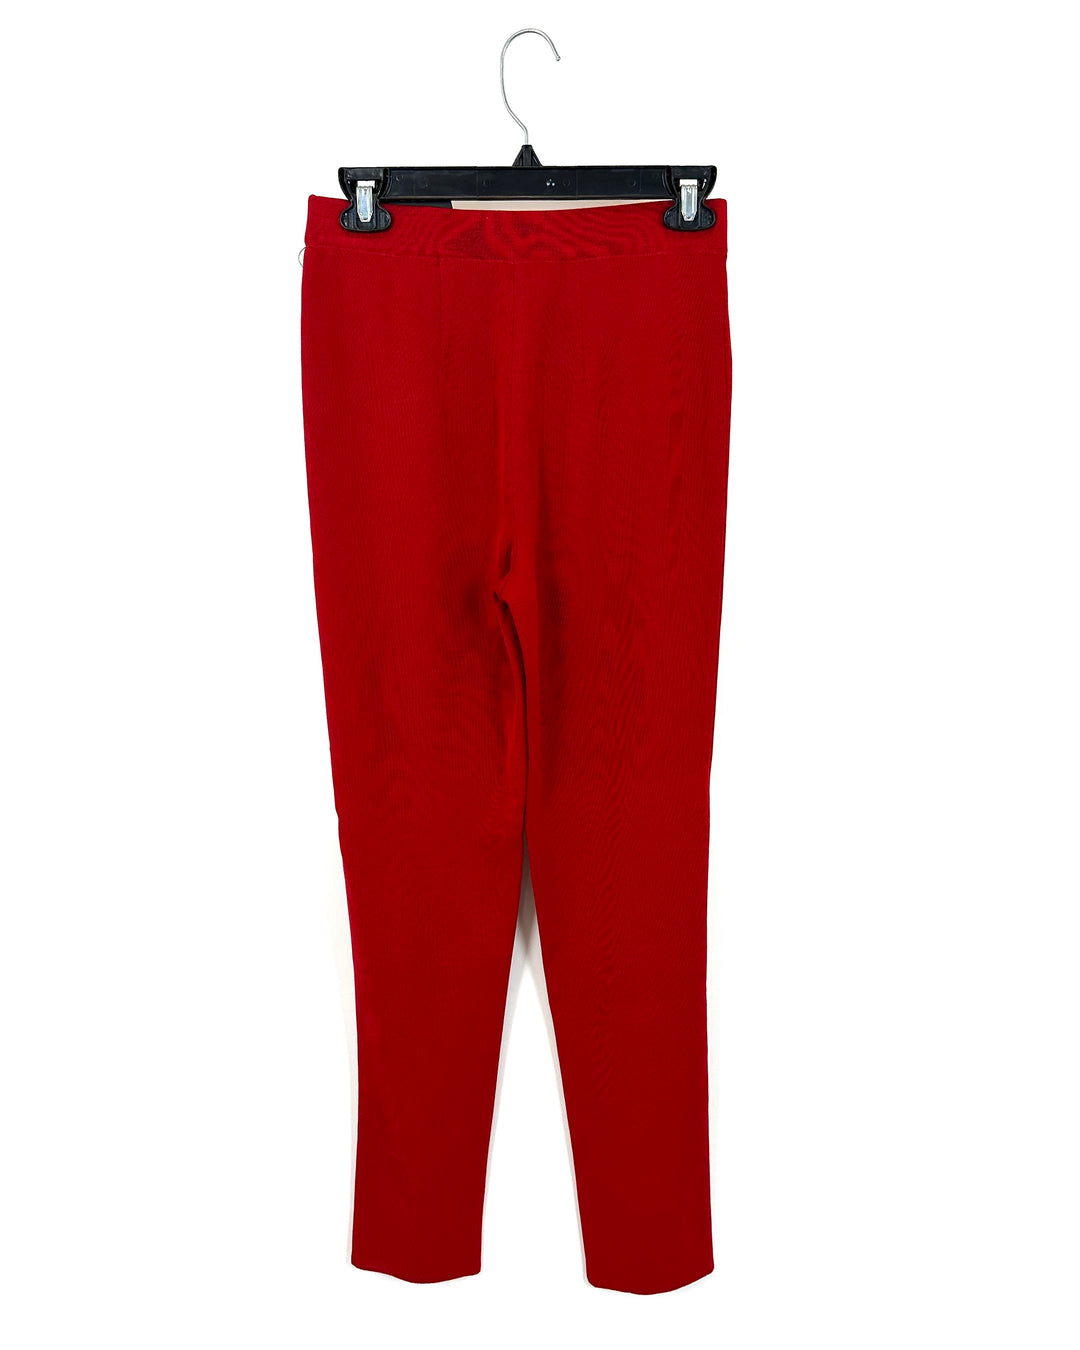 Red Slim Leg Ribbed Pants - Size 4-6